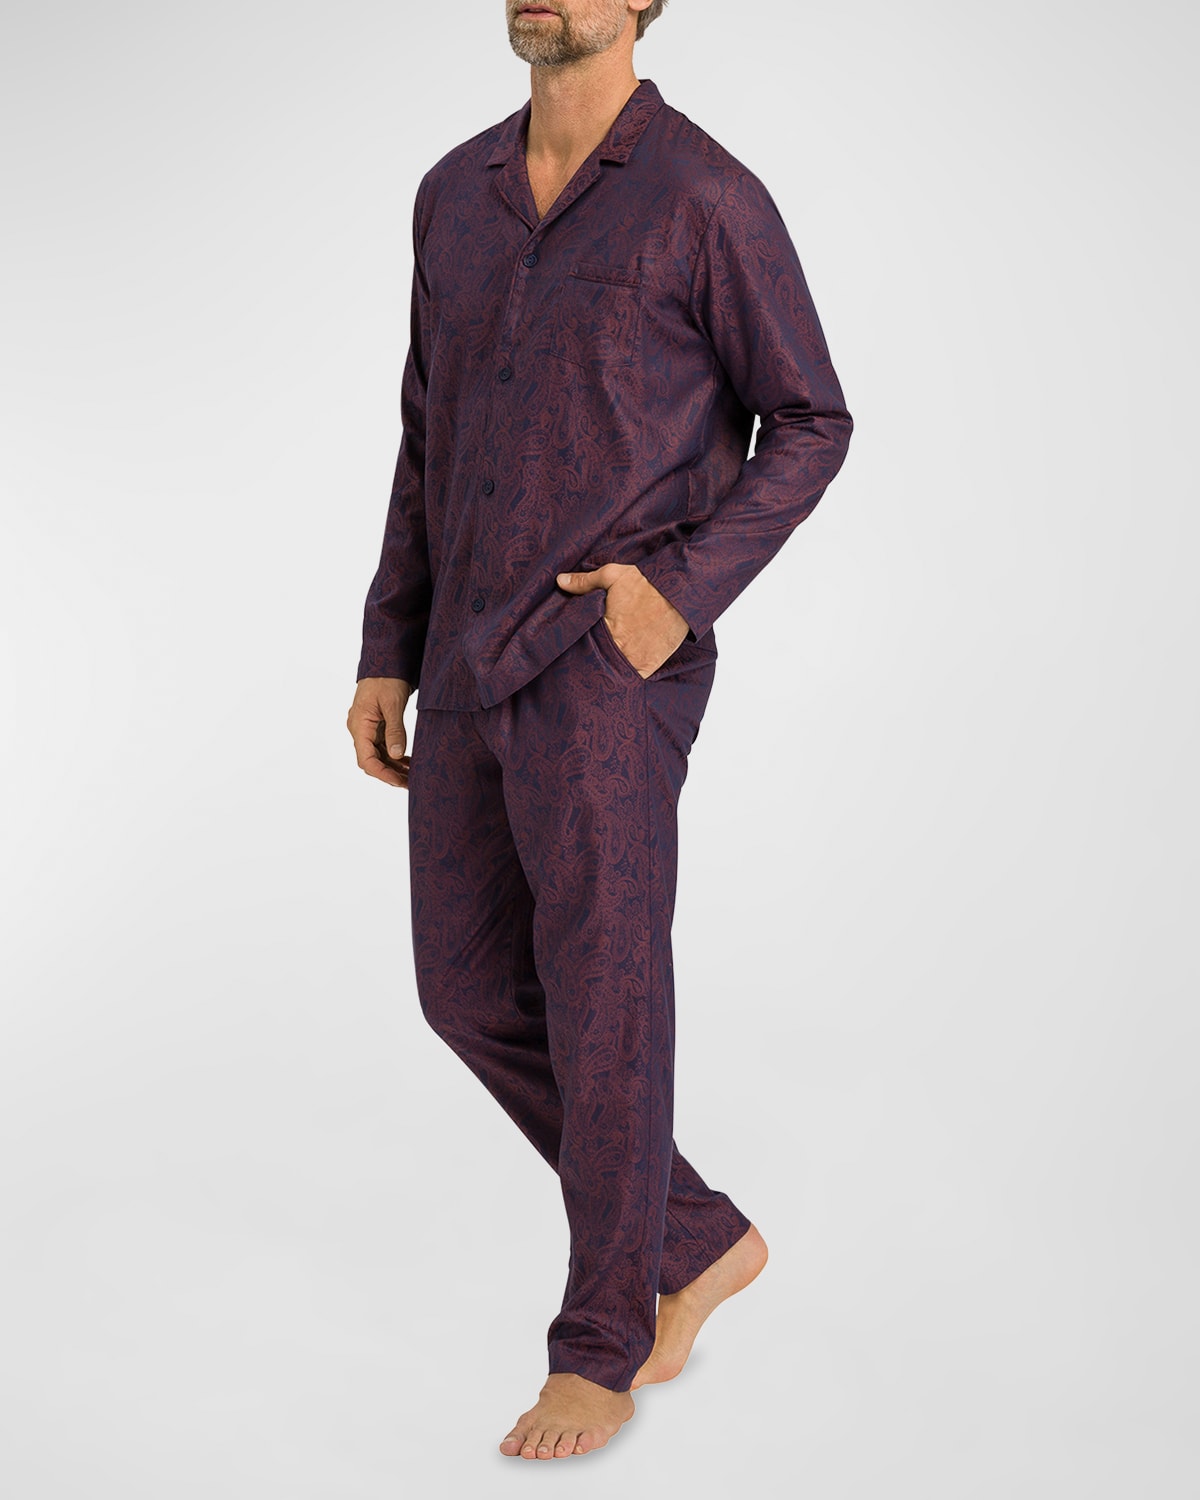 HANRO MEN'S SELECTION WOVEN pyjamas